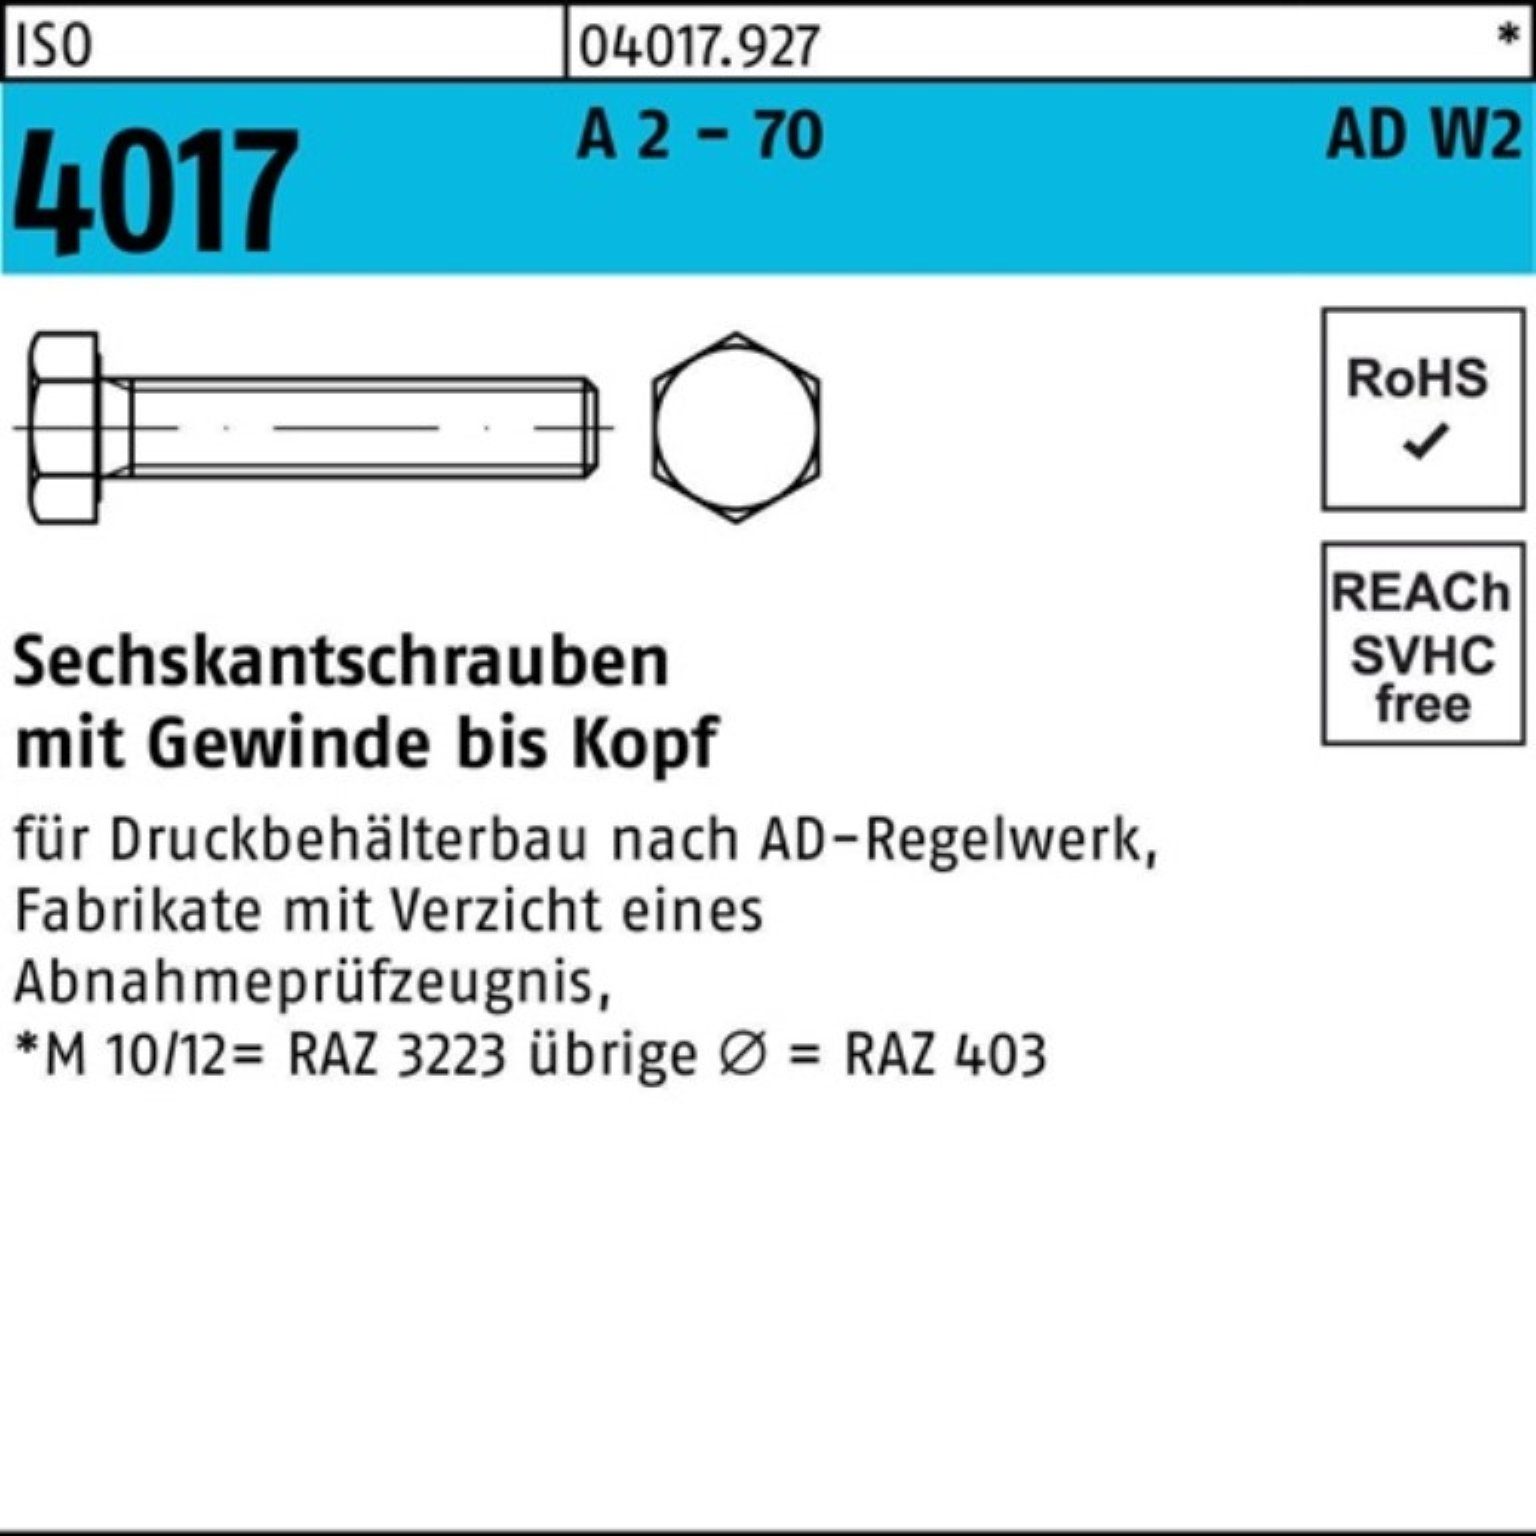 VG Bufab AD-W2 ISO Sechskantschraube A 70 100er 2 - Pack Sechskantschraube M20x 35 St 4017 25